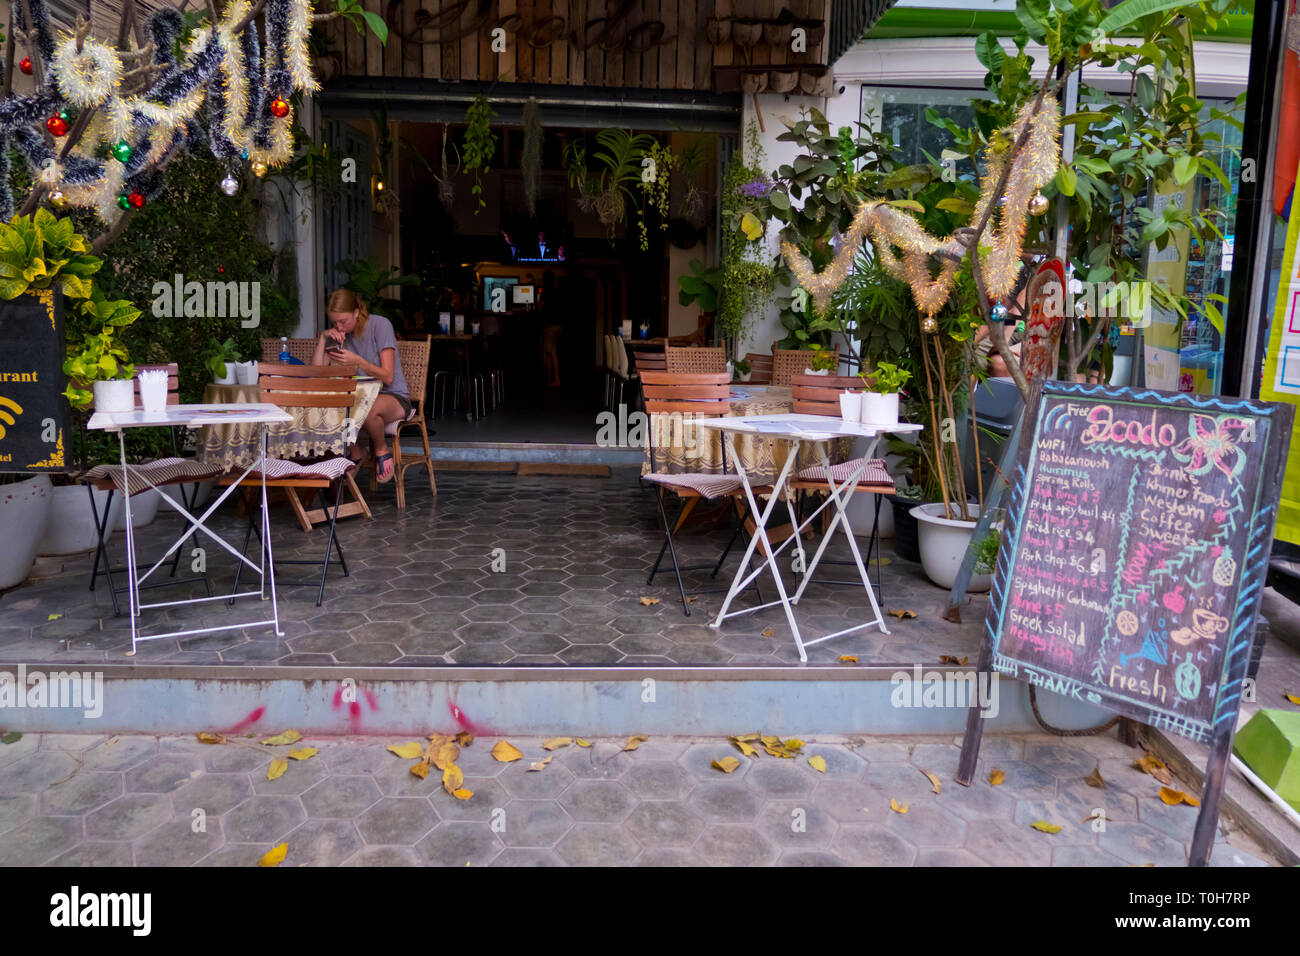 Cafe, Art street, street 178, Phnom Penh, Cambodge, Asie Banque D'Images